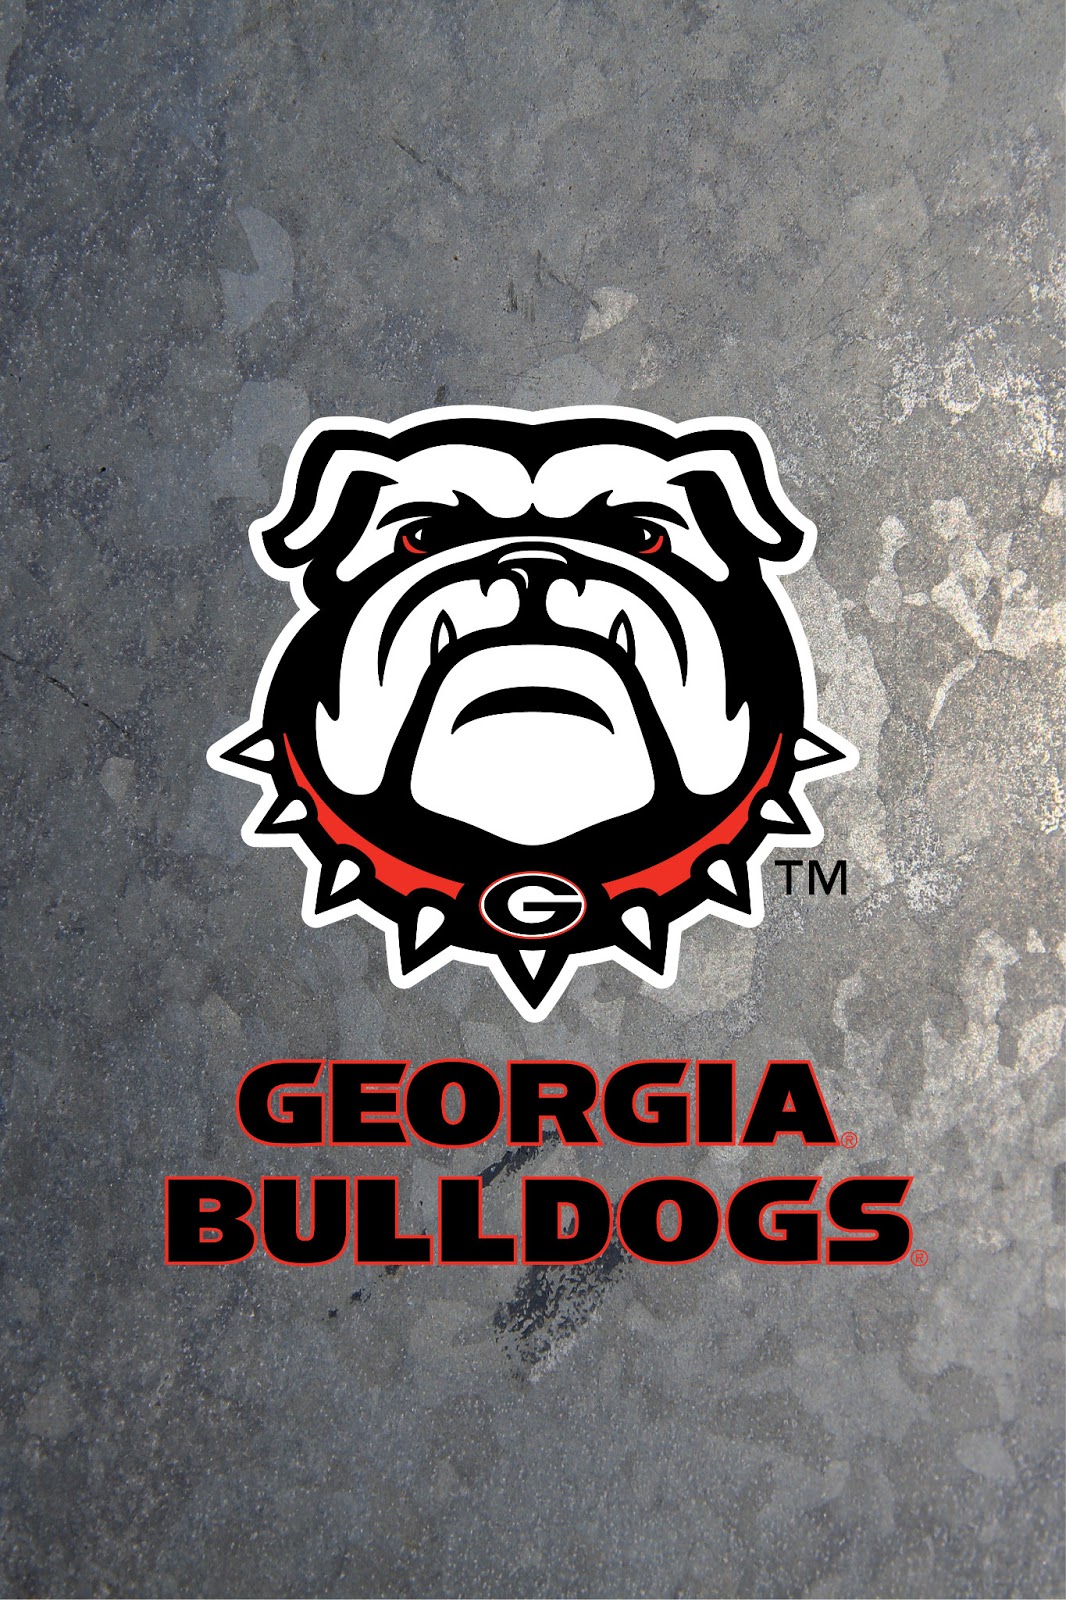 Georgia Bulldogs Wallpaper 2013 4s wallpaper with the new